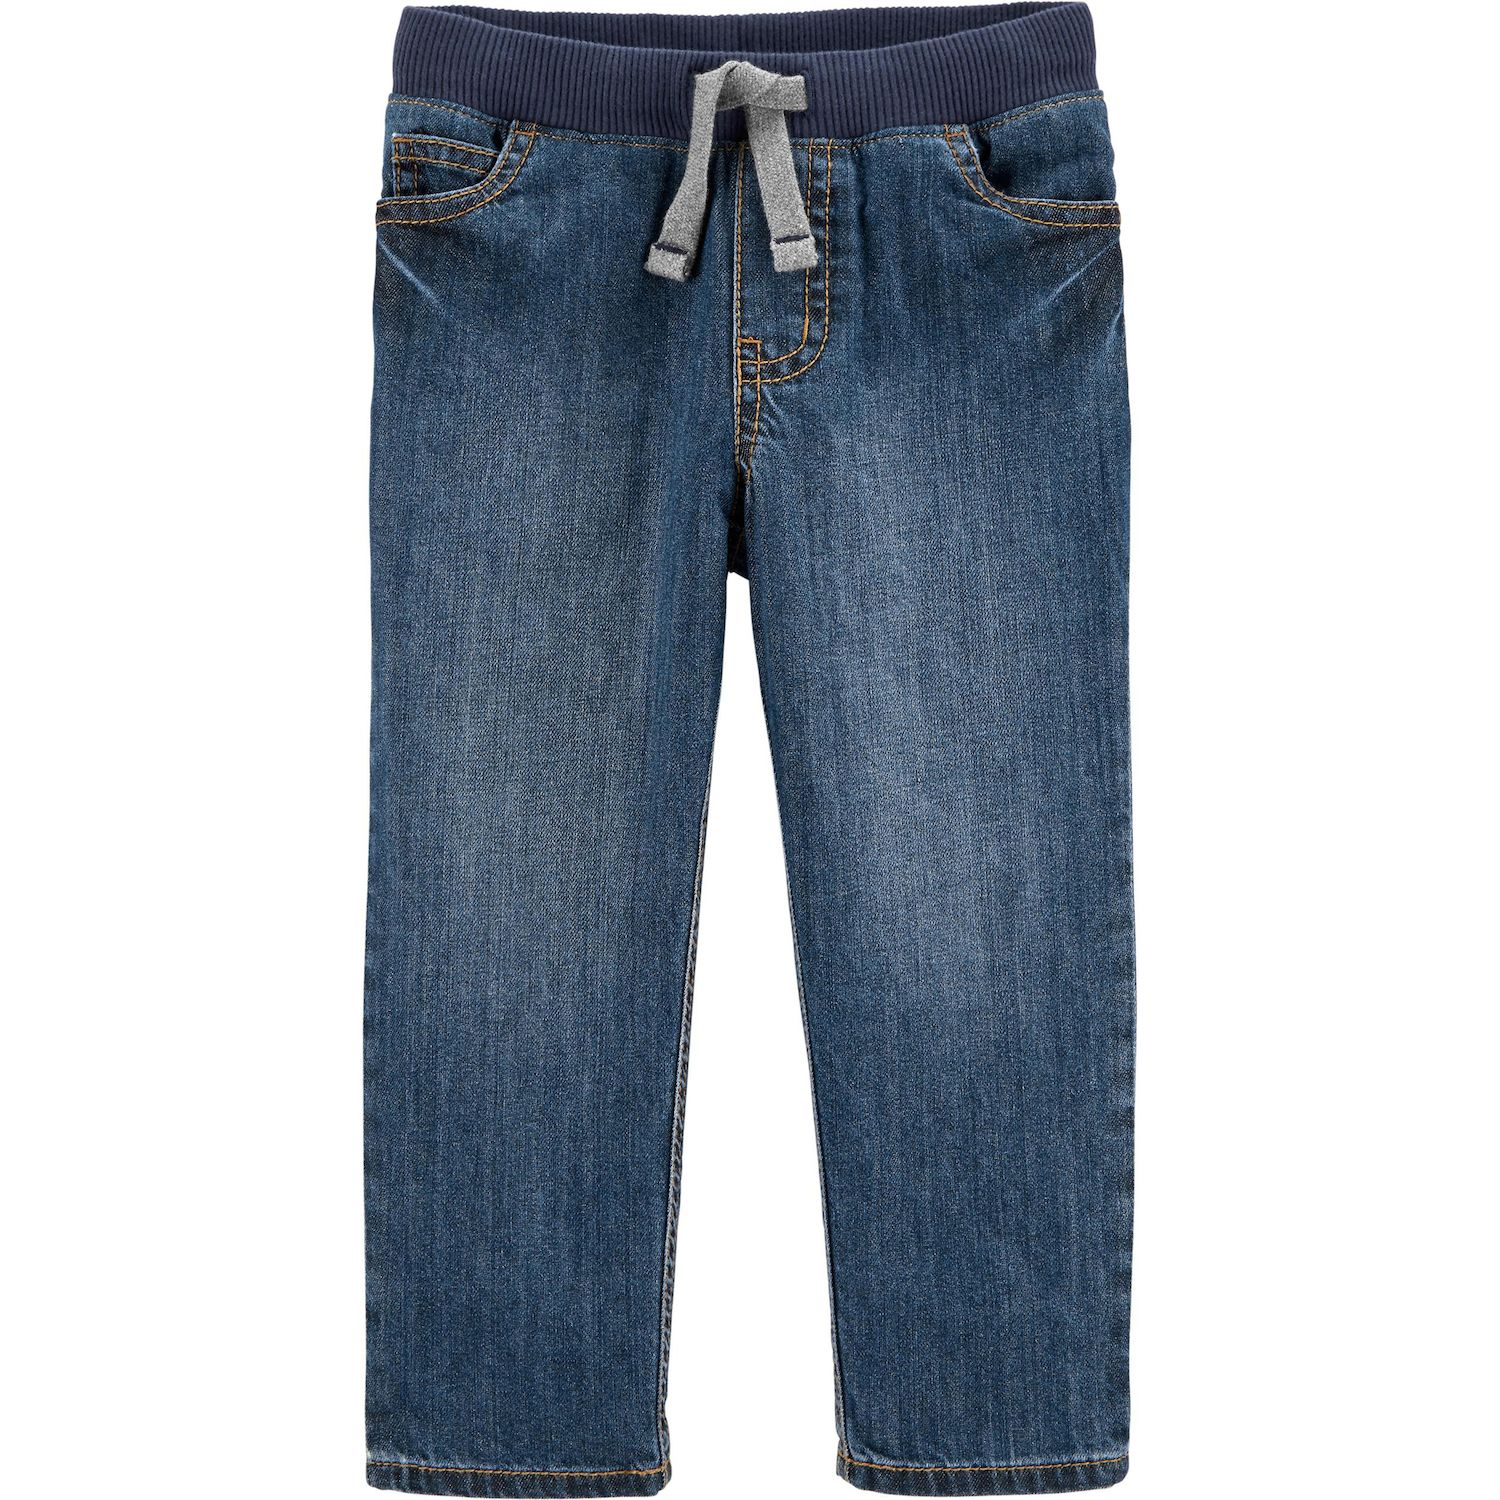 the 1964 denim company jeans